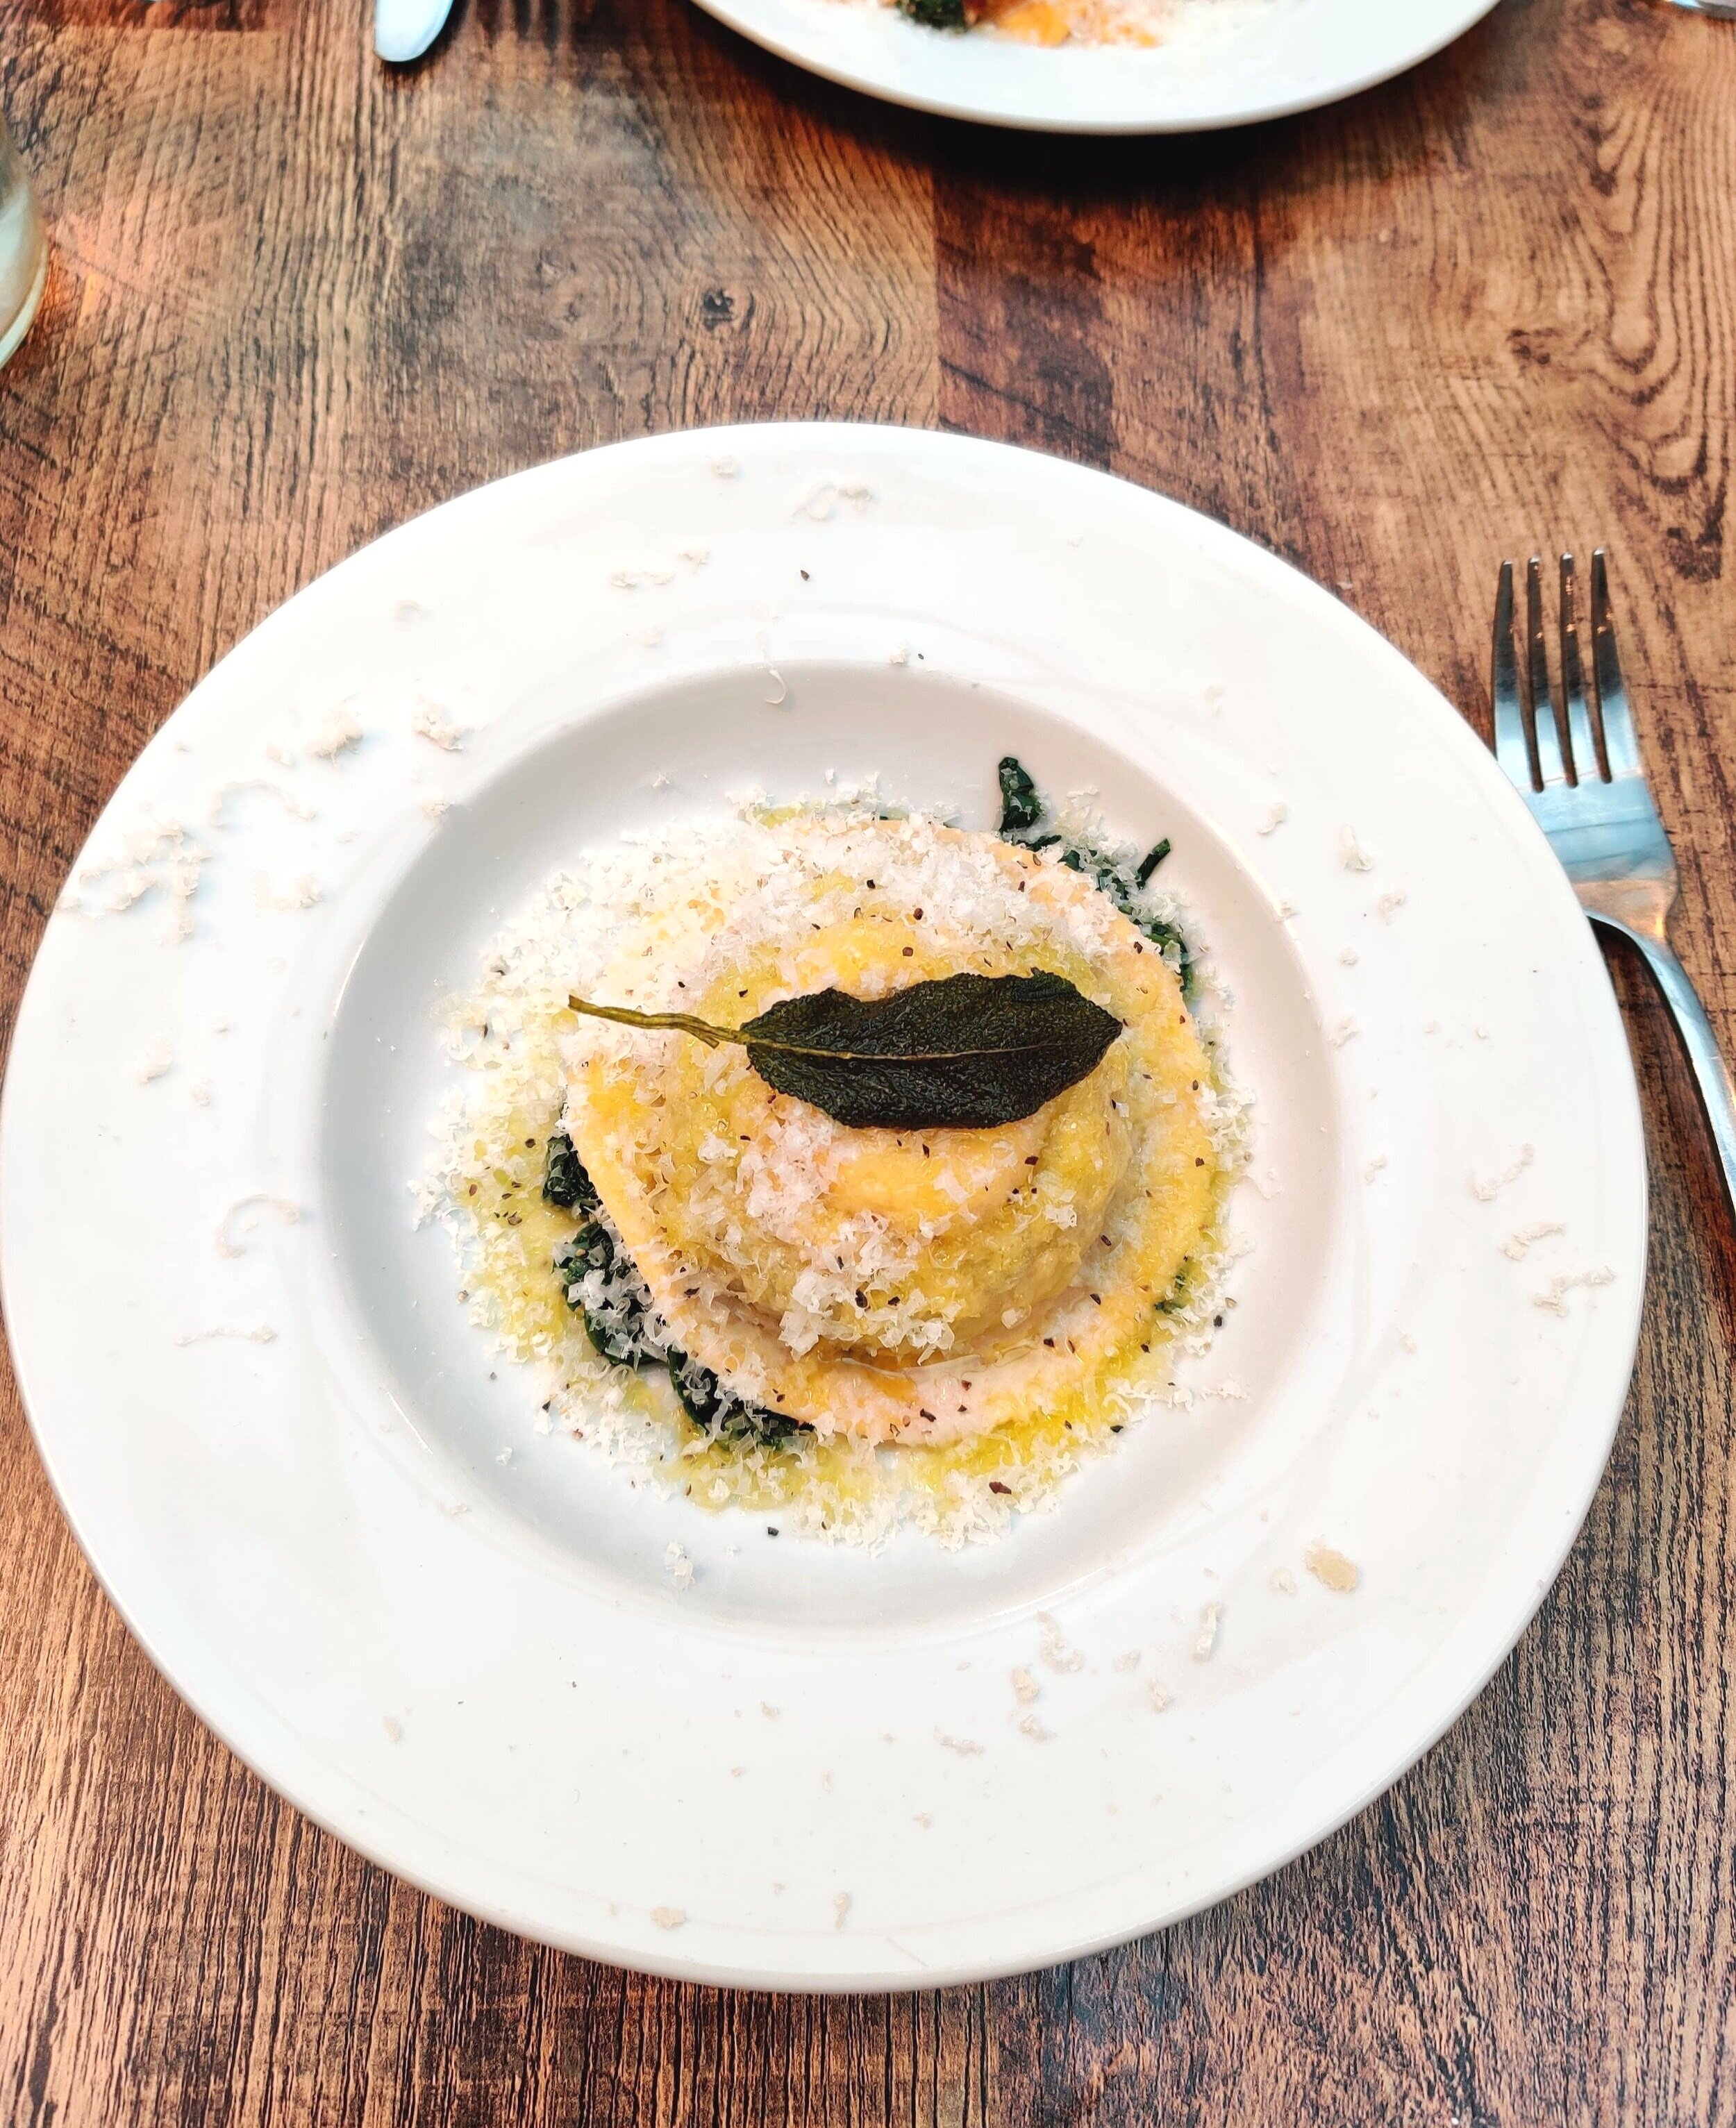 Morso London restaurant review